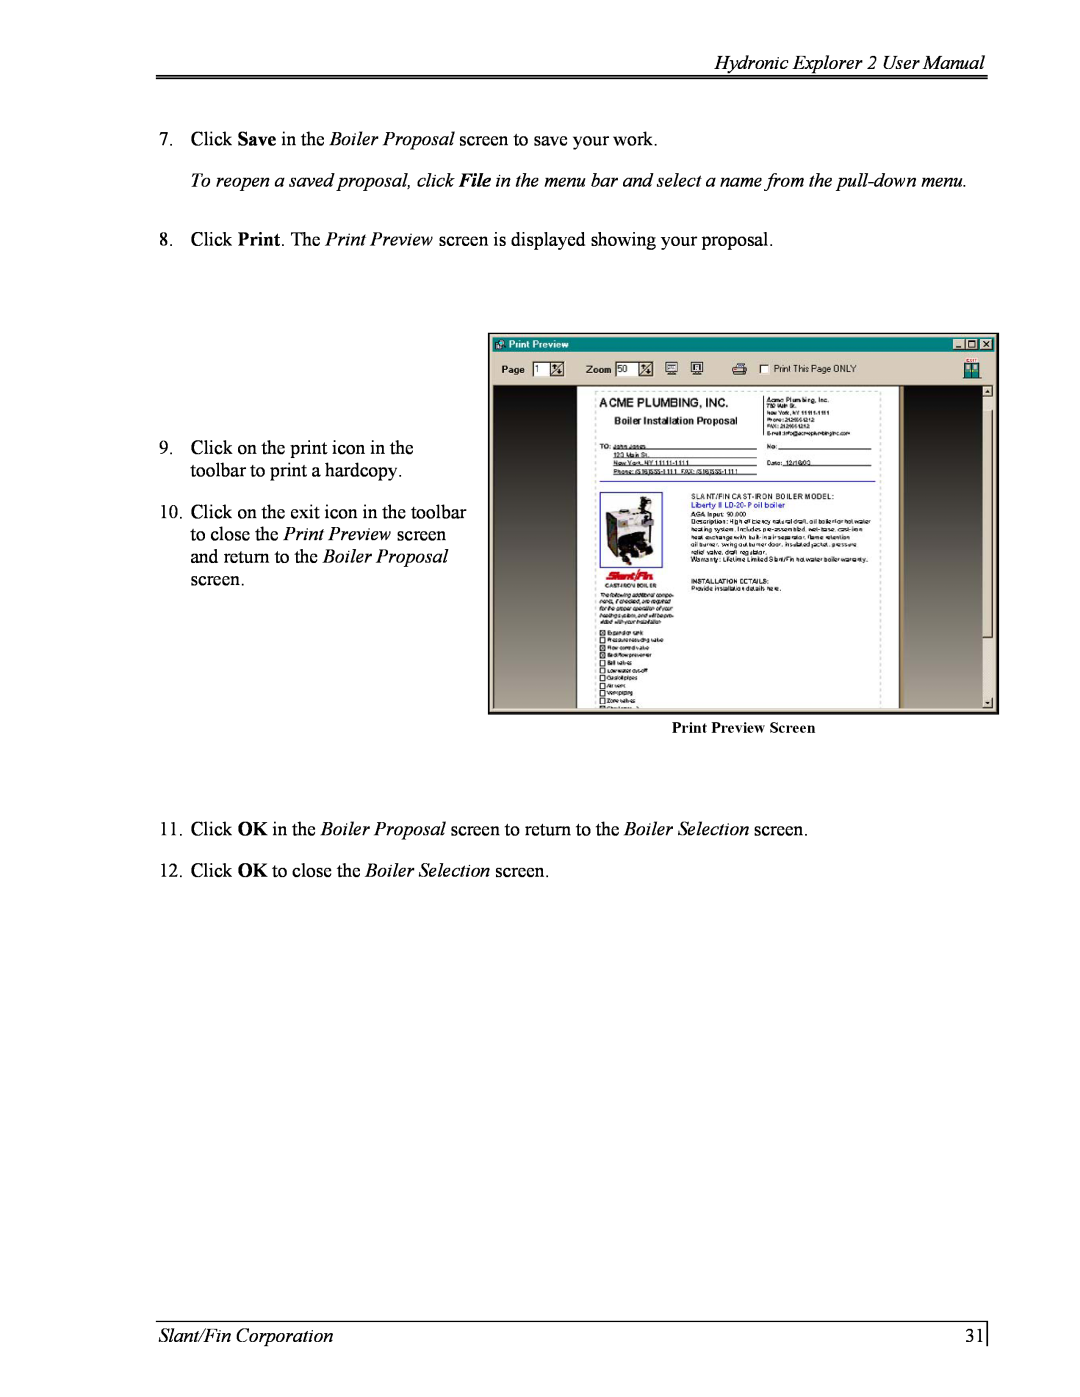 Slant/Fin Hydronic Explorer 2 user manual Click OK to close the Boiler Selection screen, Slant/Fin Corporation 